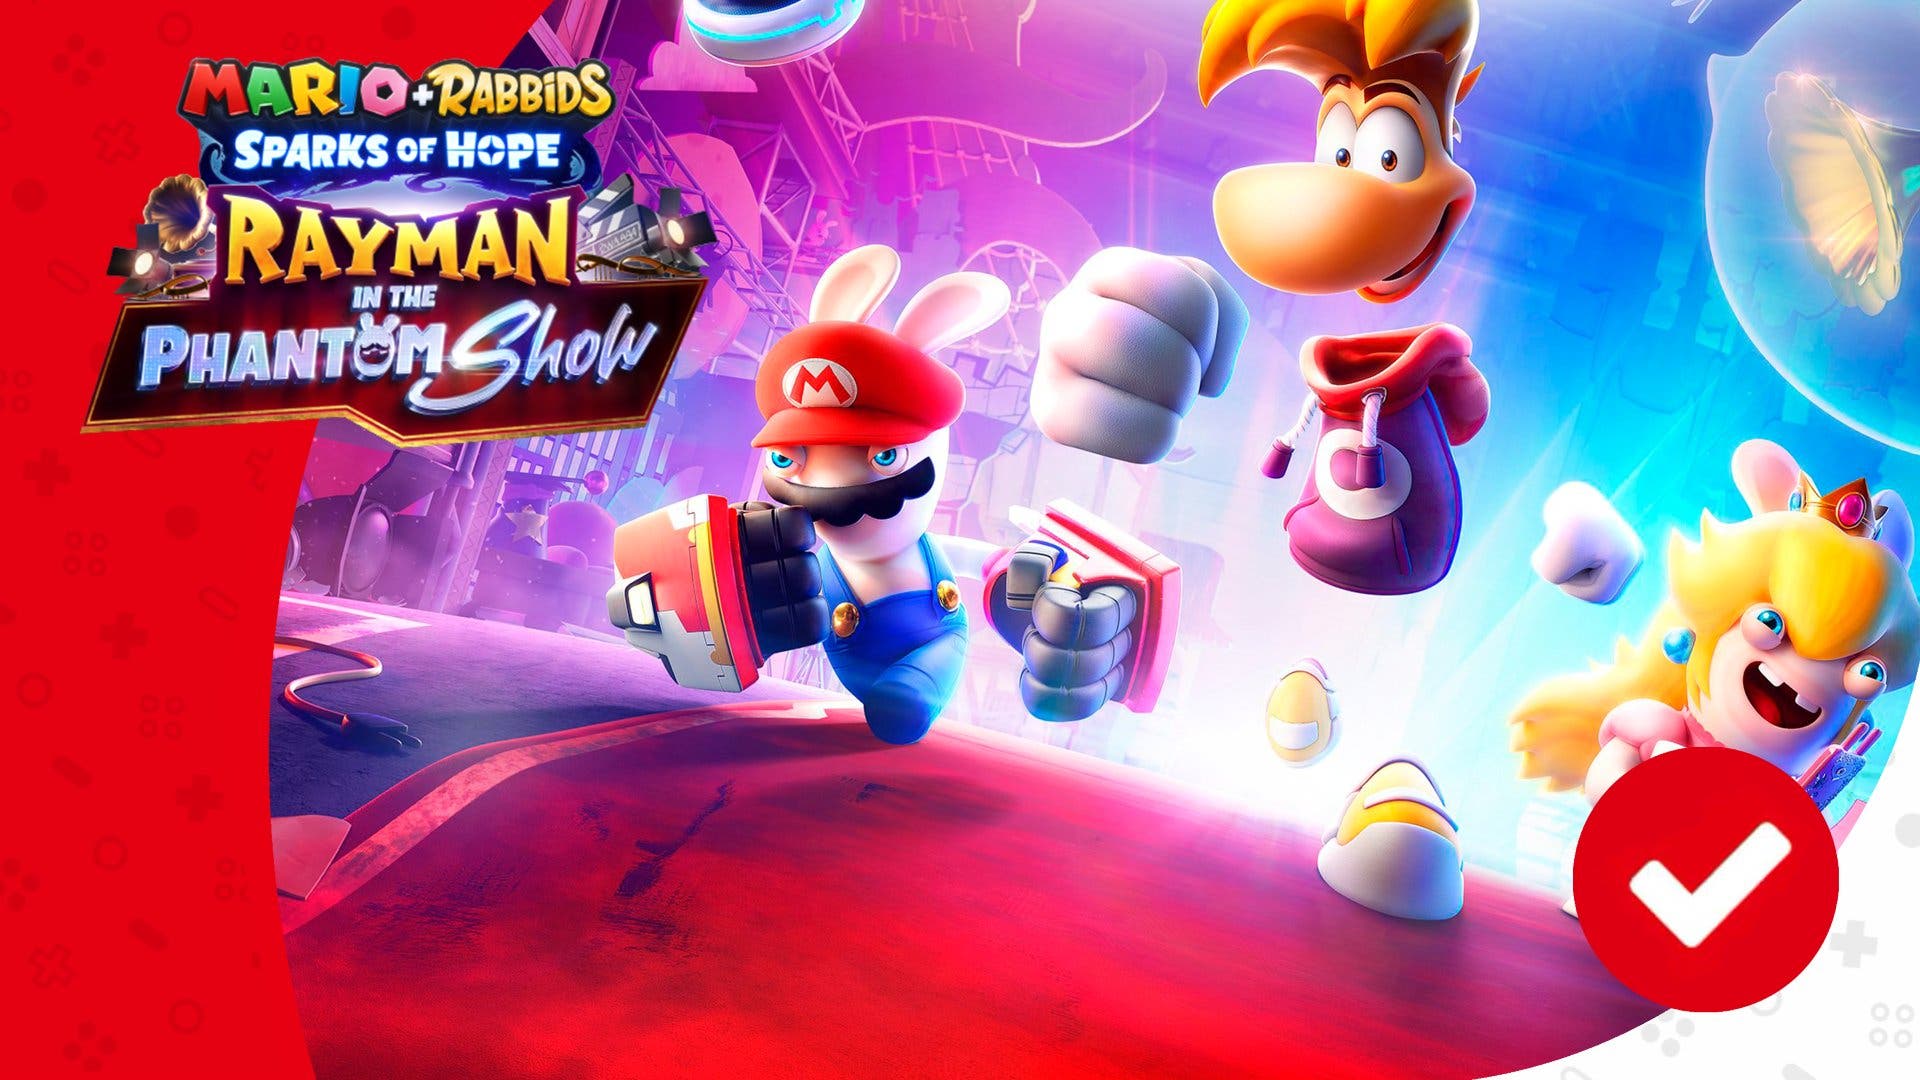 [Análisis] Mario + Rabbids Sparks of Hope: Rayman in the Phantom Show para Nintendo Switch